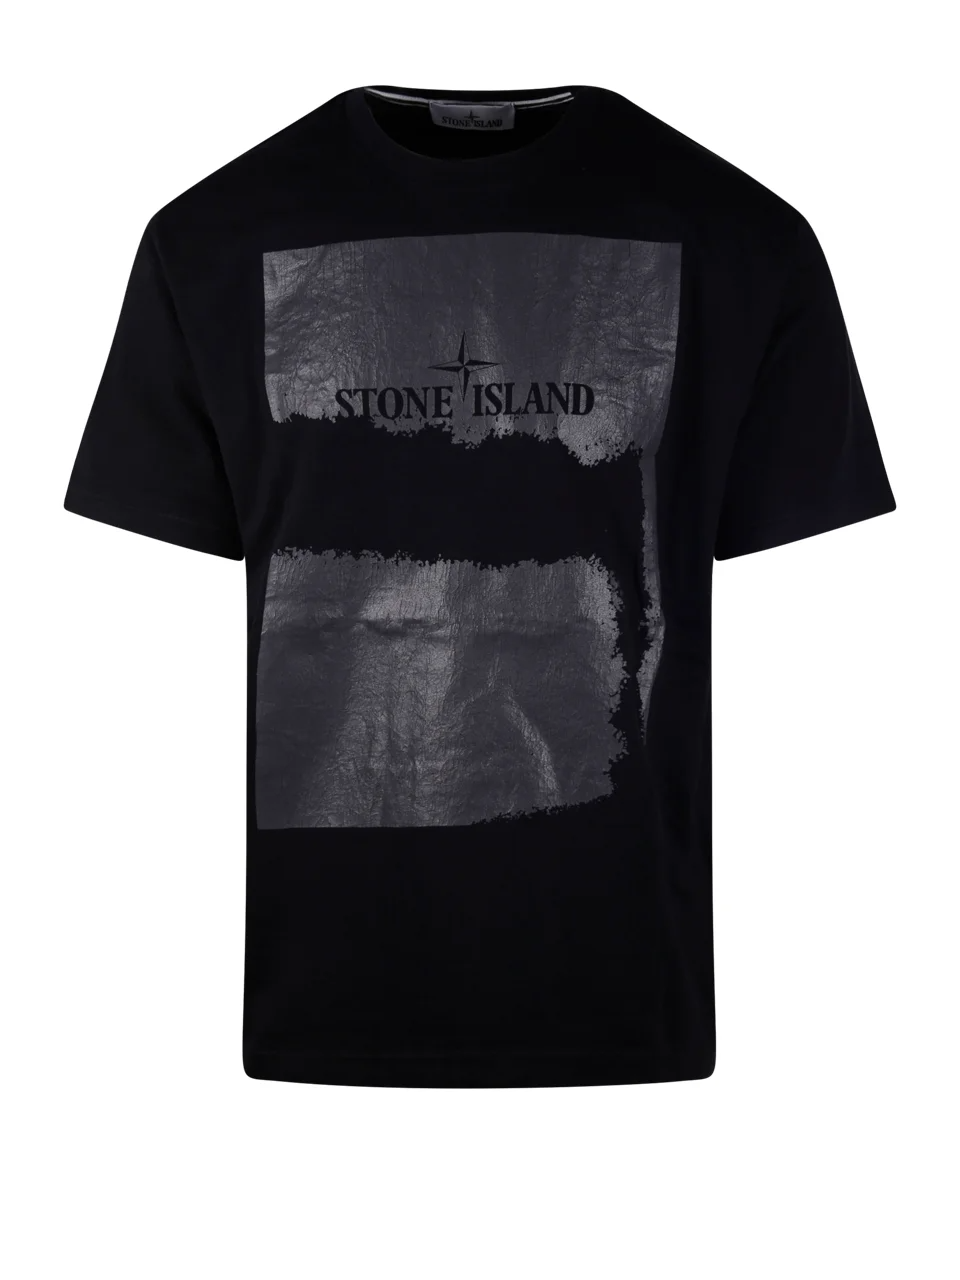 Stone Island Cracked Print T Shirt Black